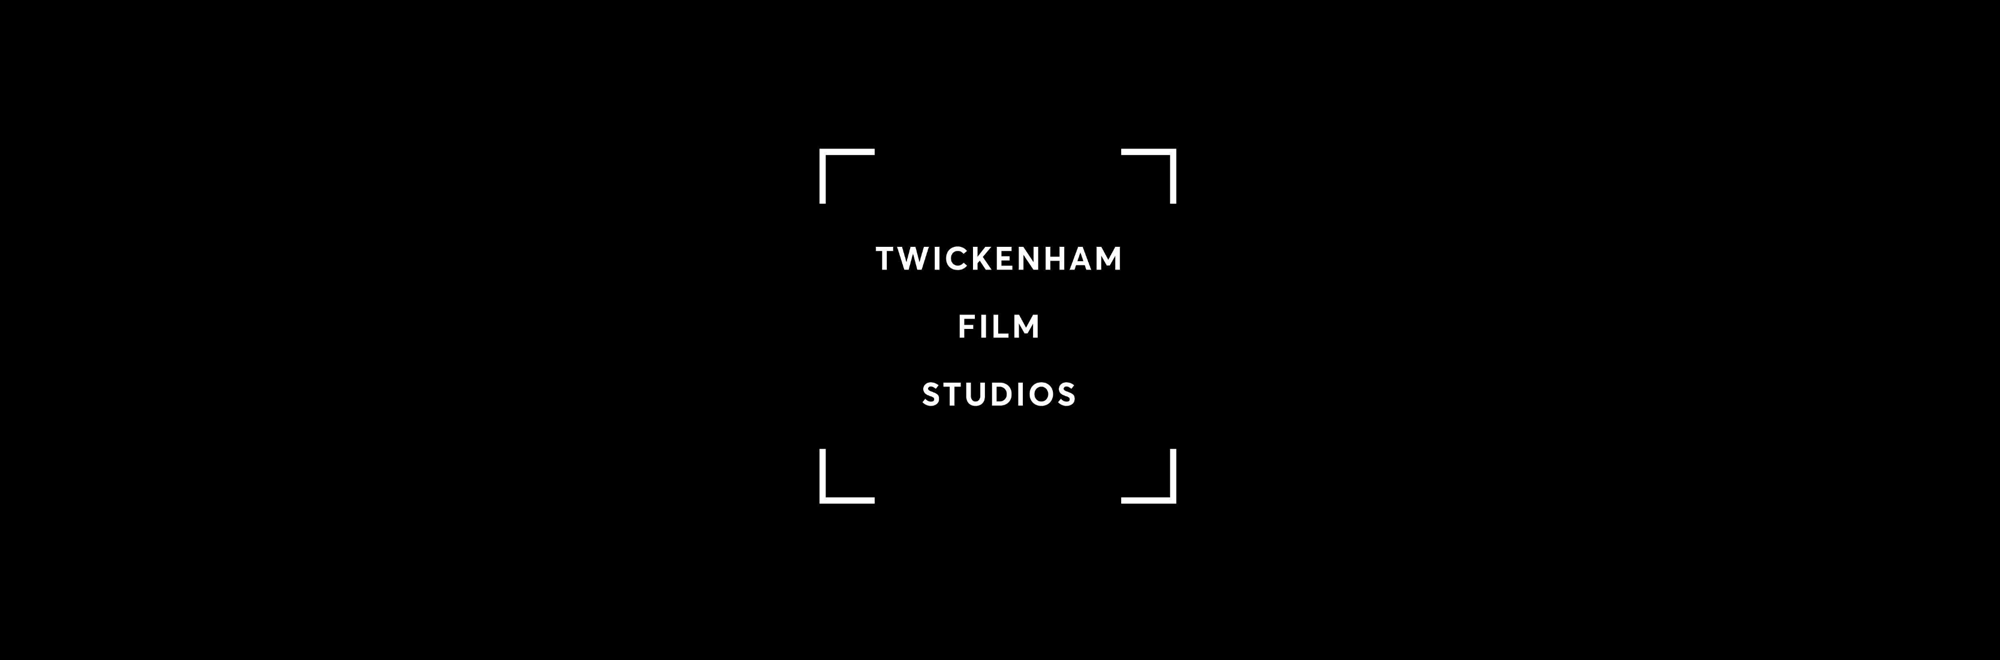 Twickenham Film Studios celebrates million pound redevelopment by rebranding as a 'Home For Filmmakers'